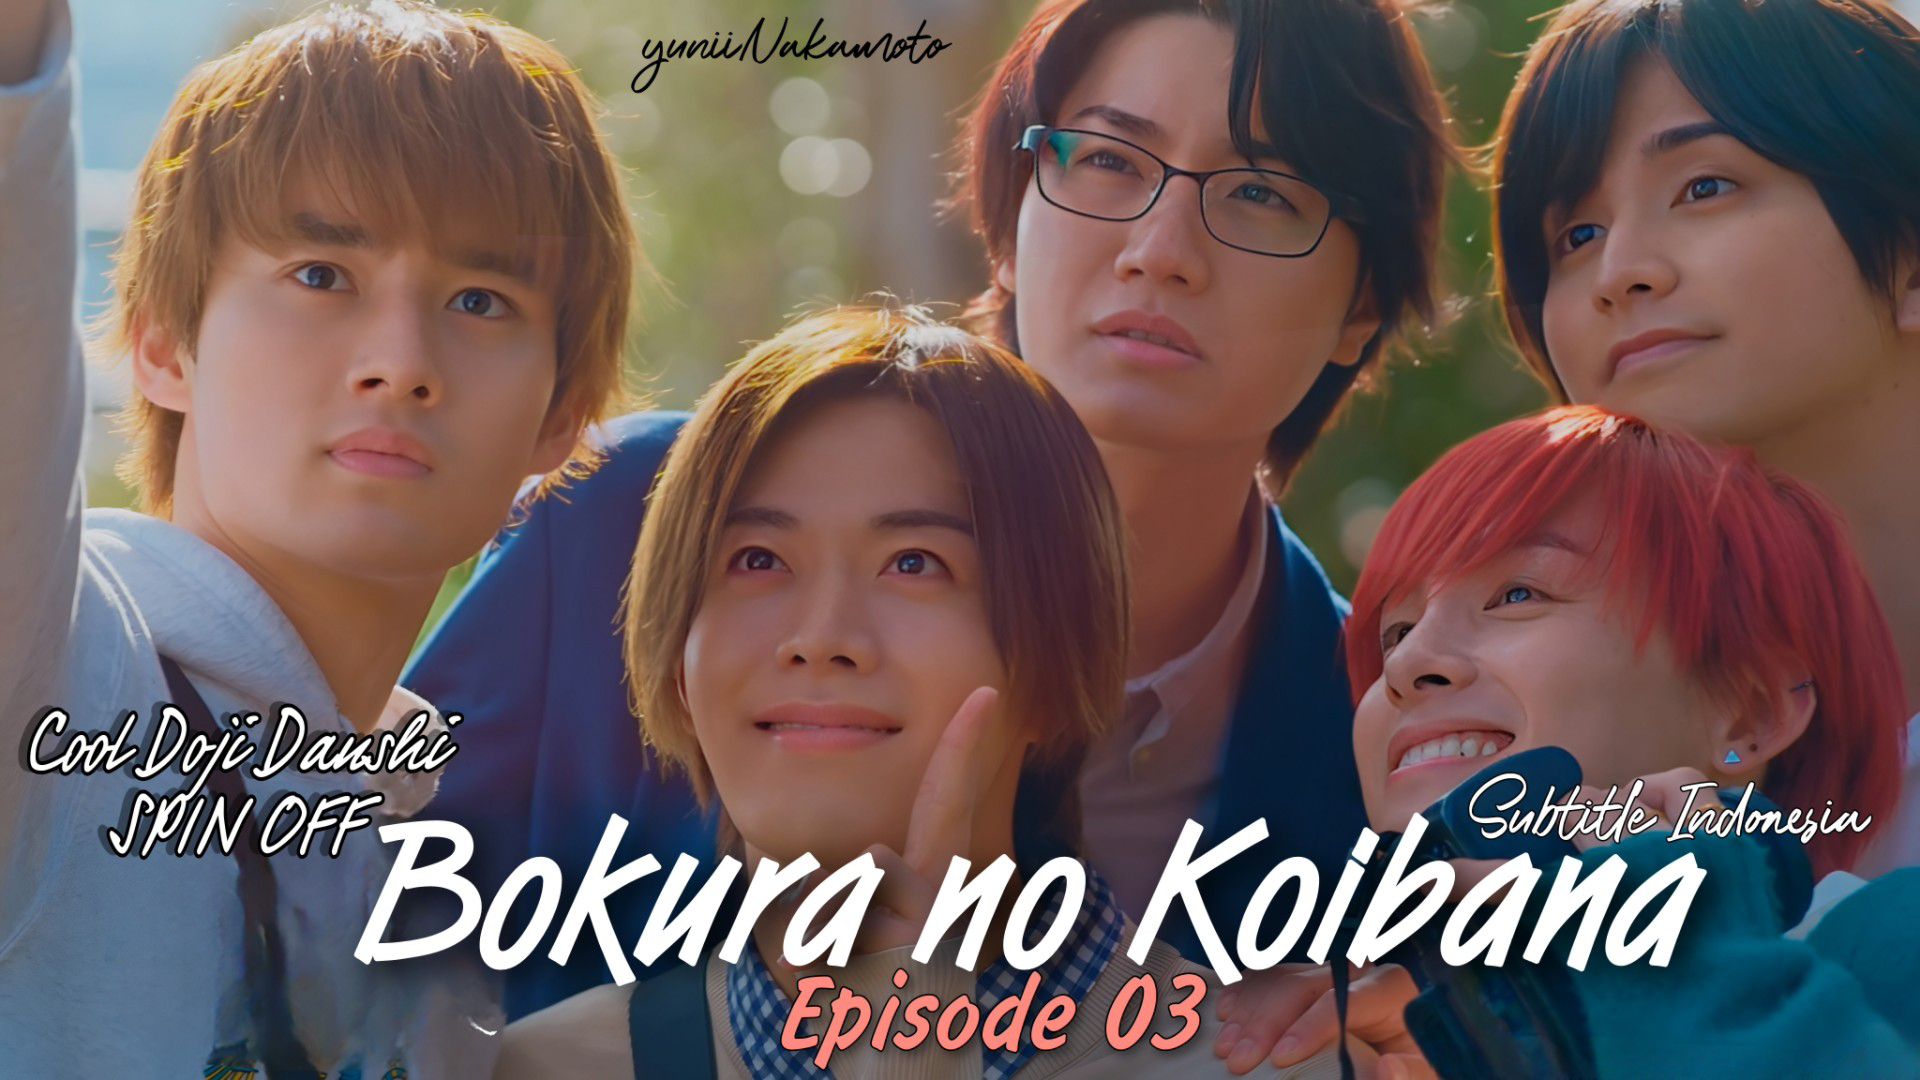 BOKURA NO KOIBANA Episode 04 -END- (Cool Doji Danshi SPIN OFF) Subtitle  Indonesia by CHStudio♡ 